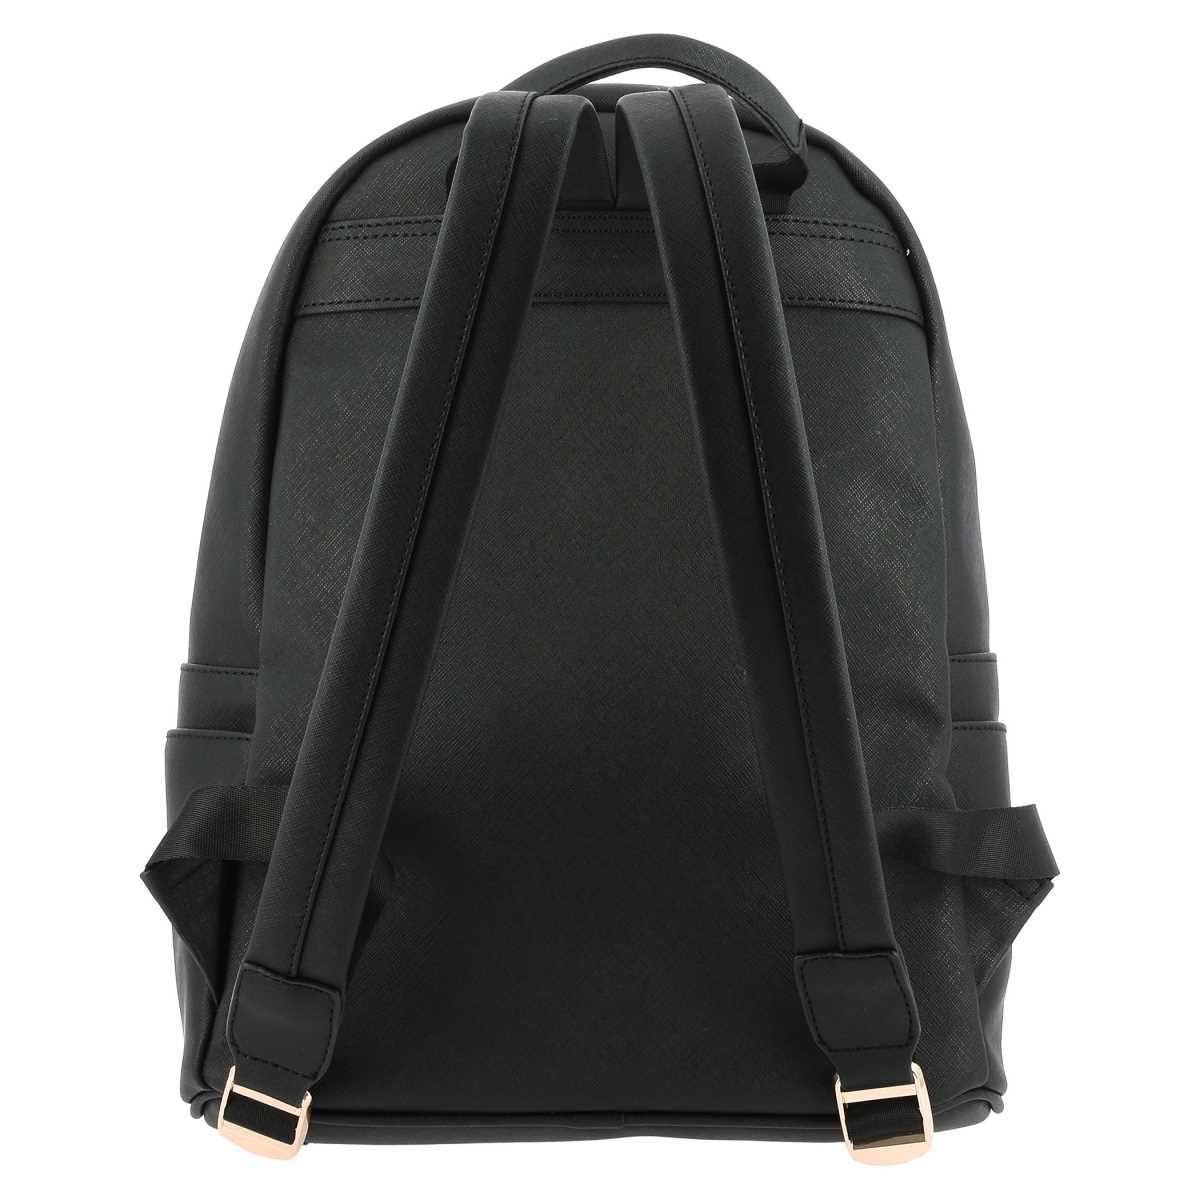 Backpack Negra con Bater&iacute;a Interior para Recargar Celular Westies